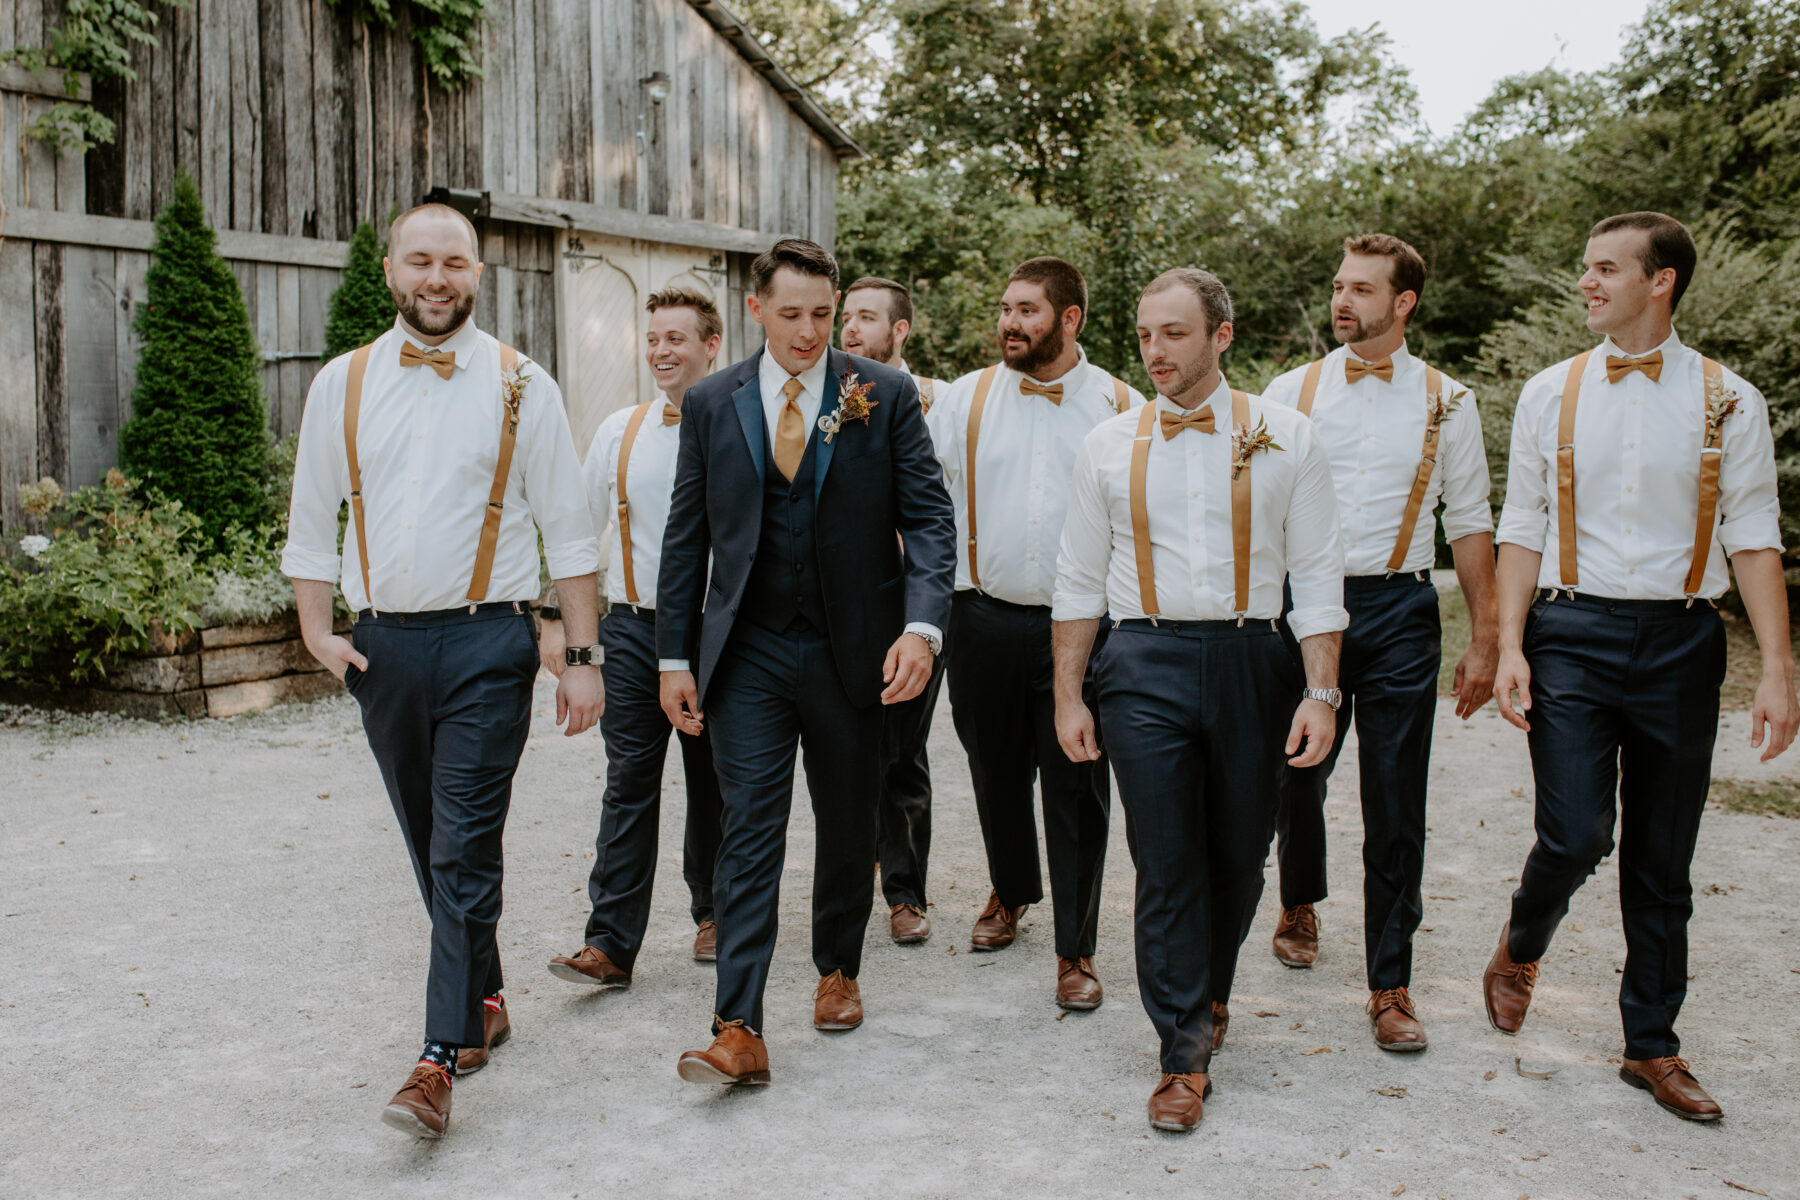 Groom and groomsmen attire from Tuxedo Avenue